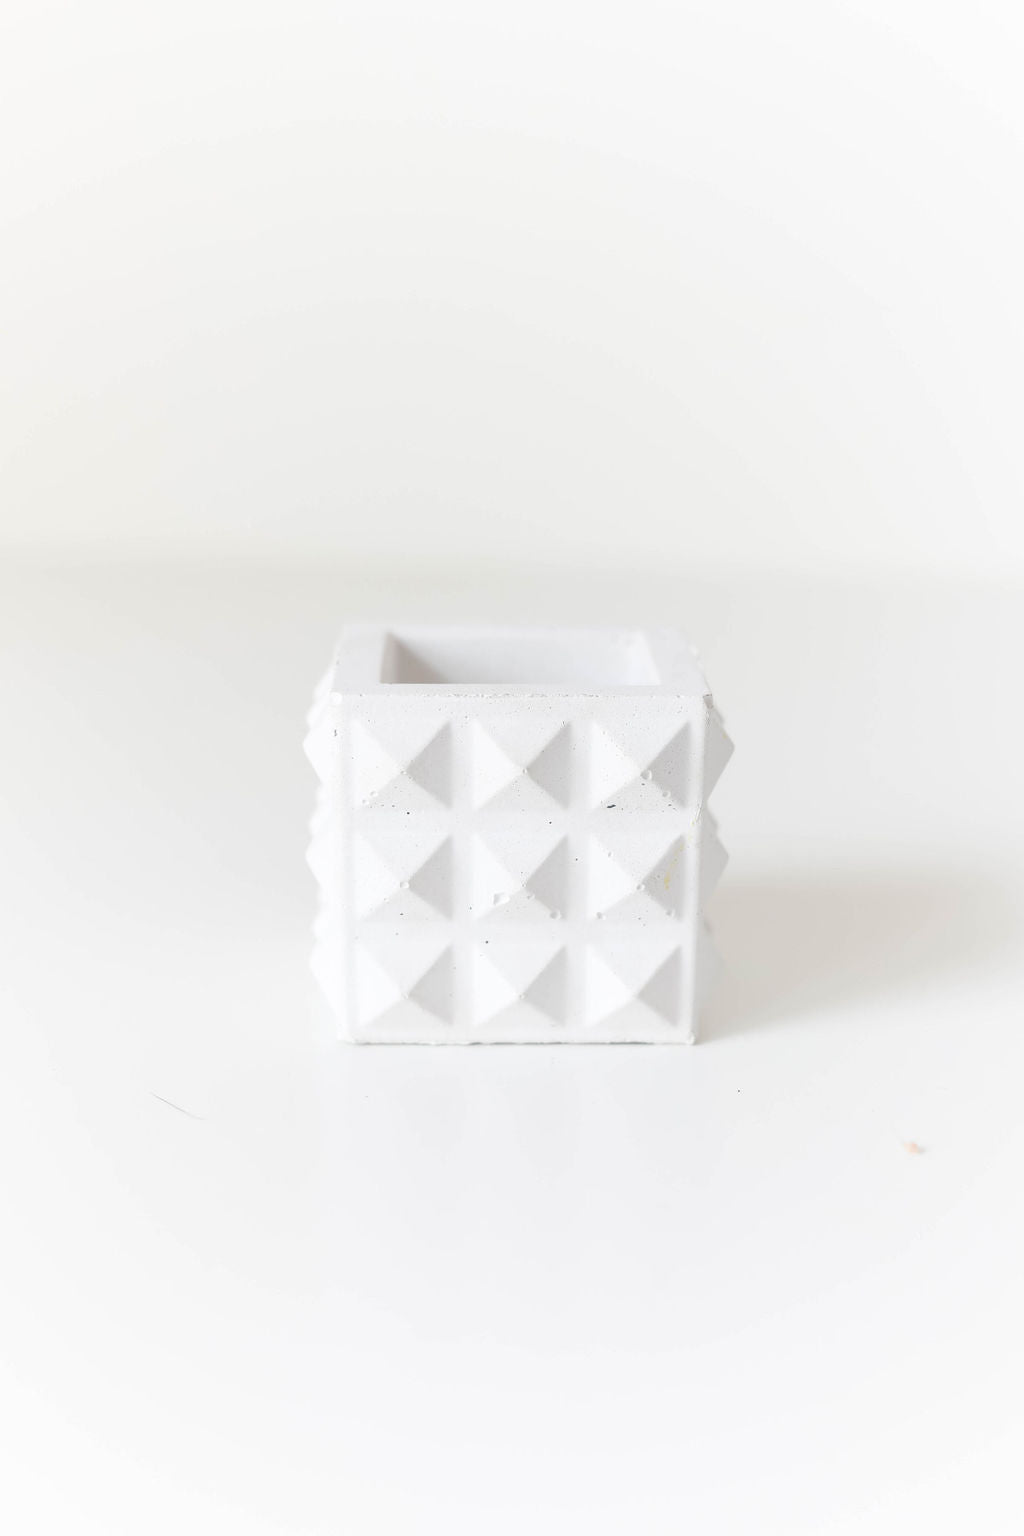 Mini Pyramid Cube